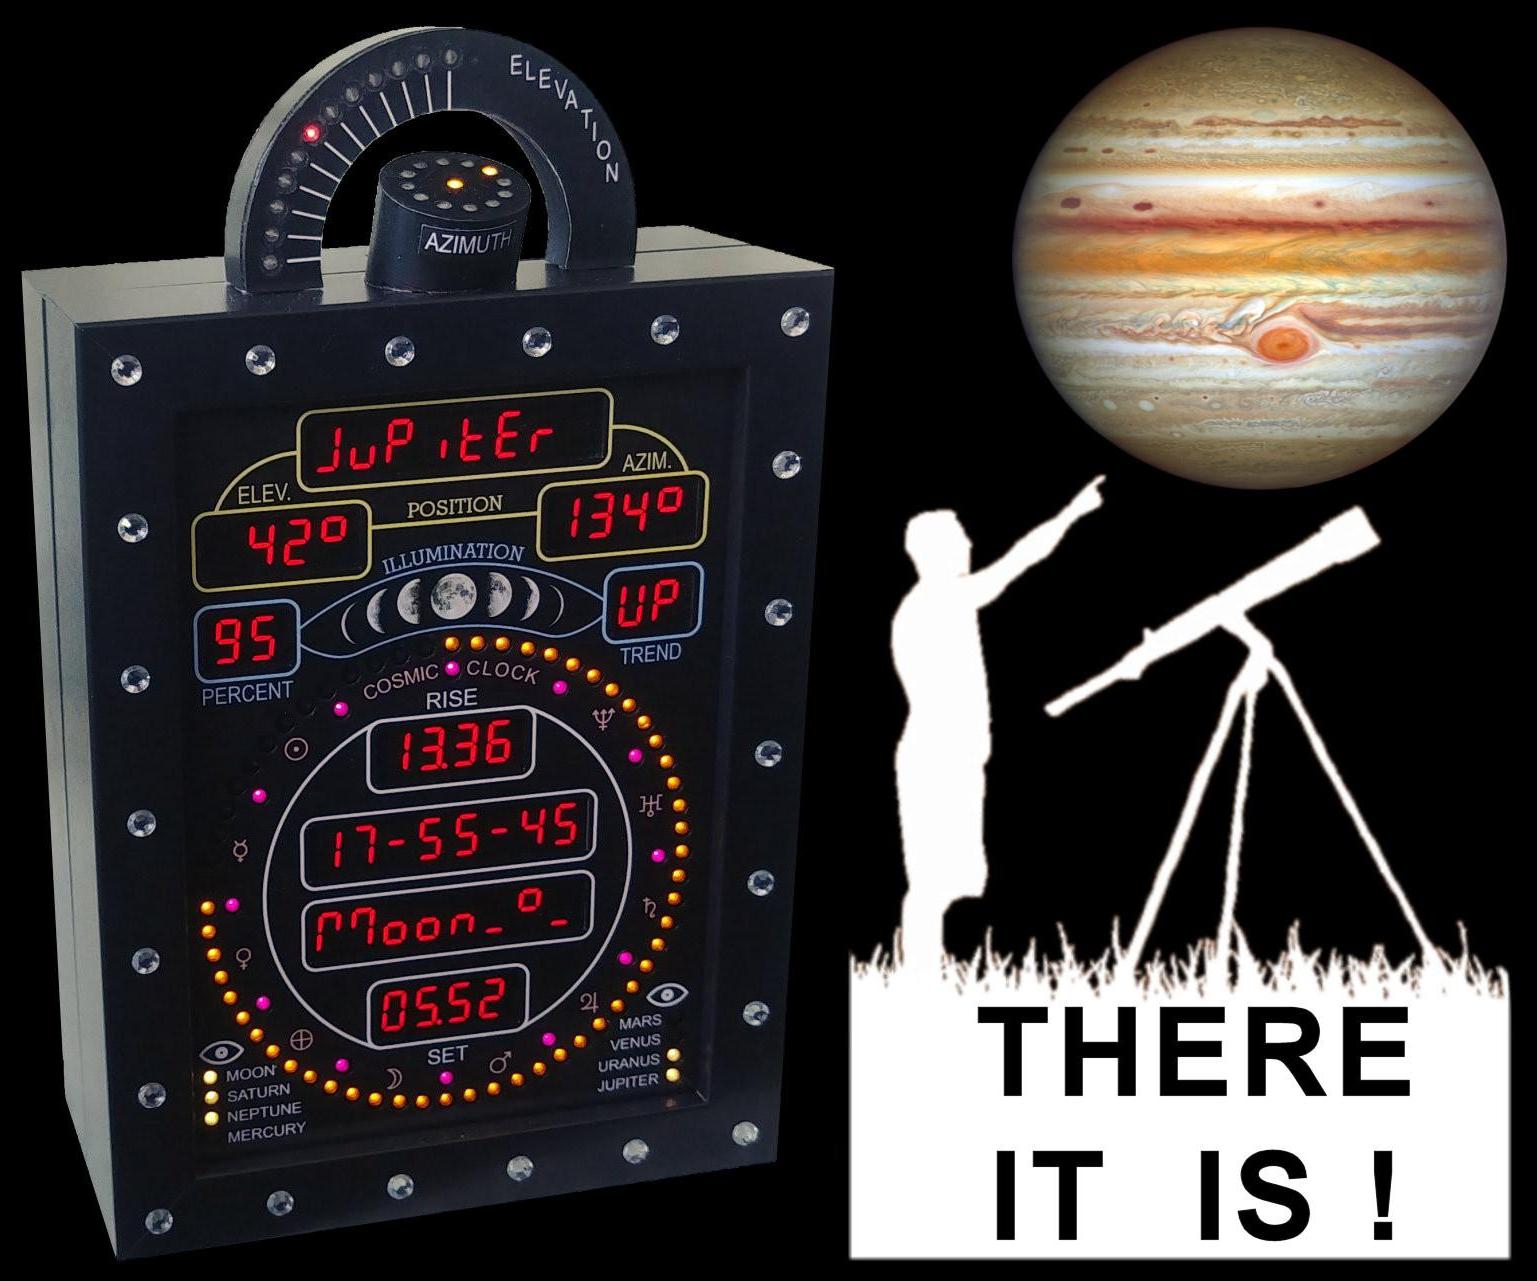 Planet Locating 'Cosmic Clock'